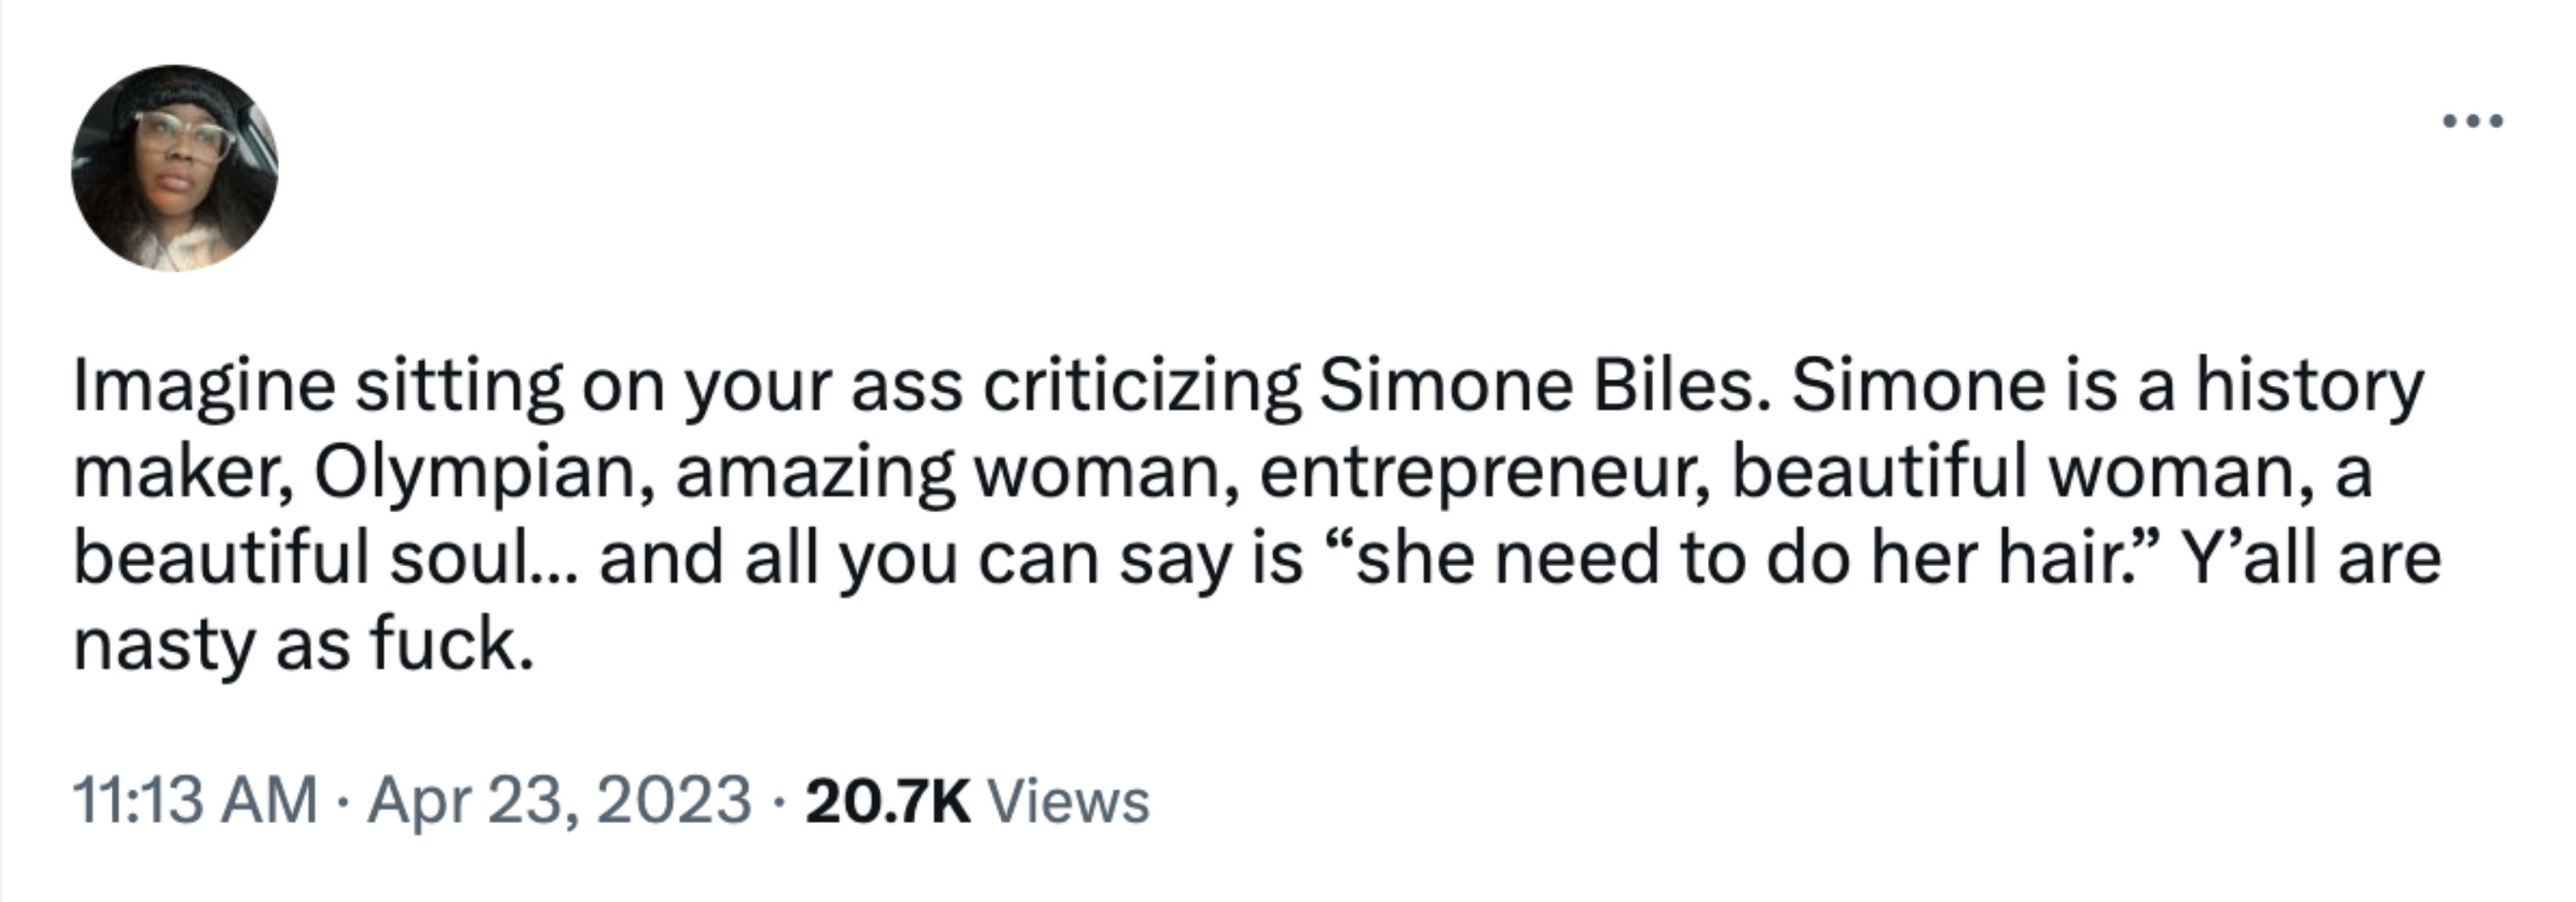 Imagine sitting on your ass criticizing Simone Biles. Simone is a history maker, Olympian, amazing woman, entrepreneur, beautiful woman, a beautiful soul